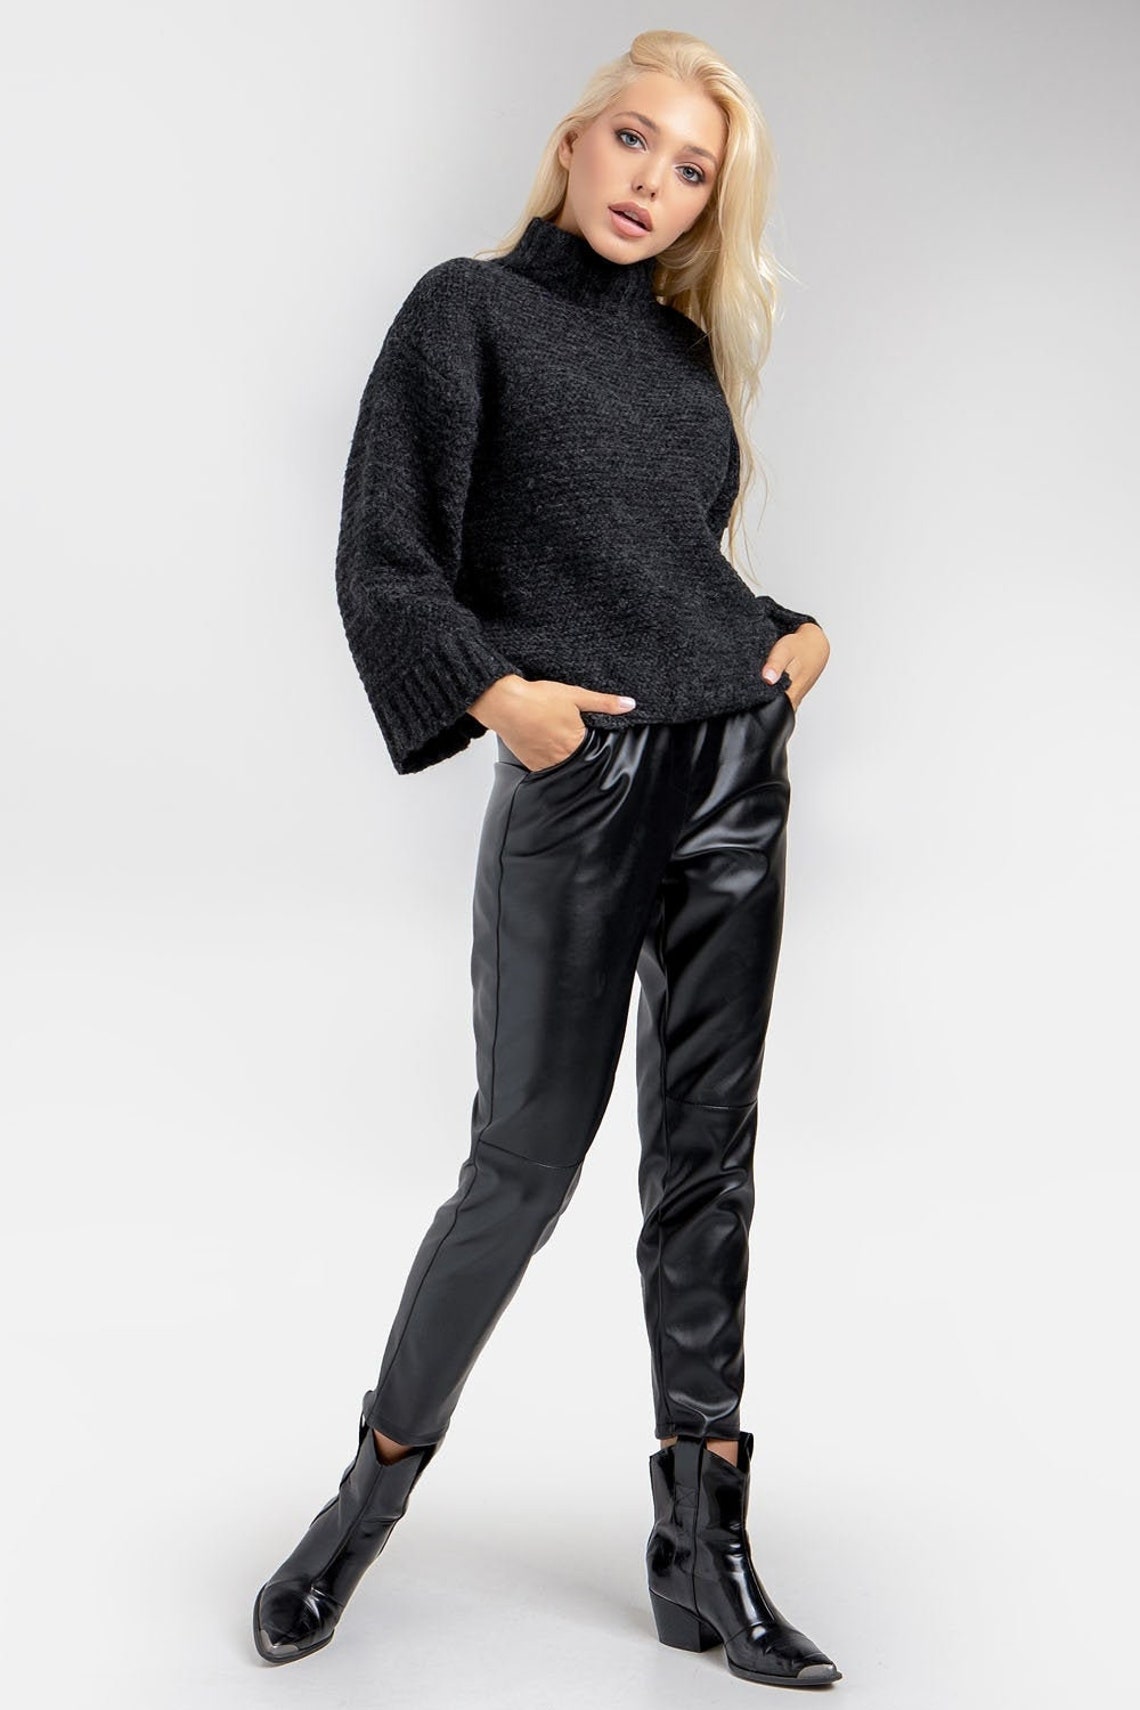 Black turtleneck sweater Womens knit sweater Loose fit cozy | Etsy